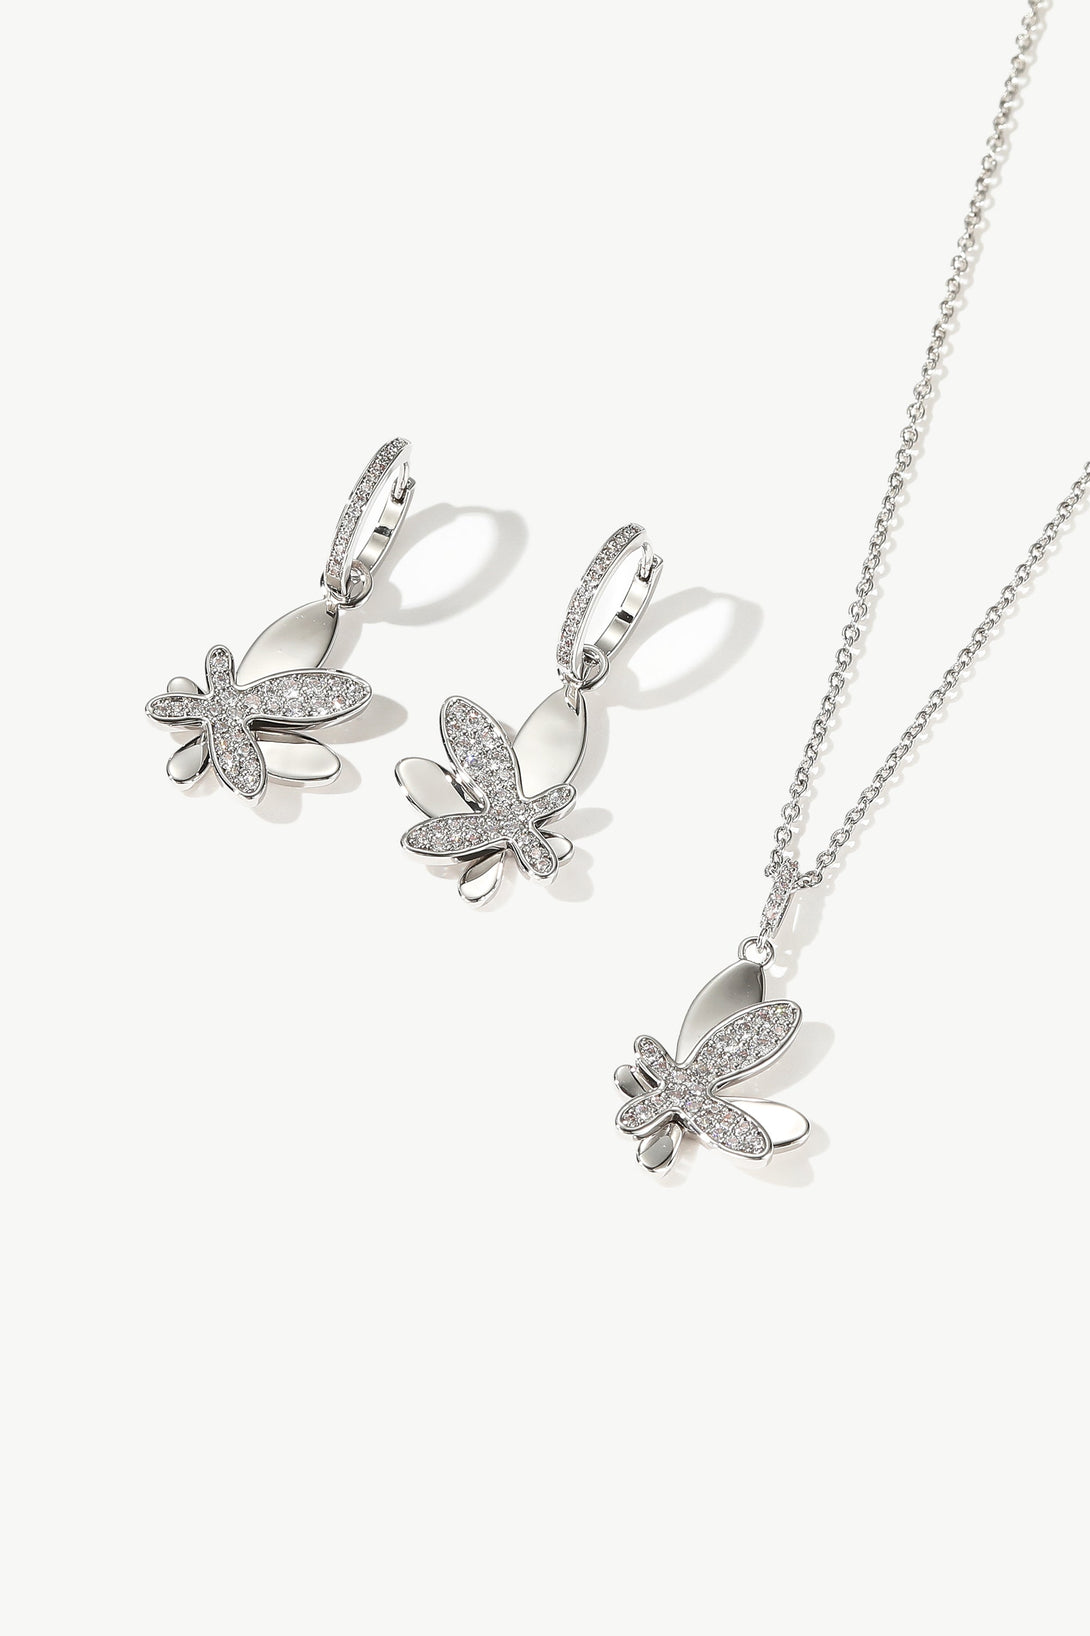 Silver Pavé Diamond Butterfly Pendant Necklace - Classicharms